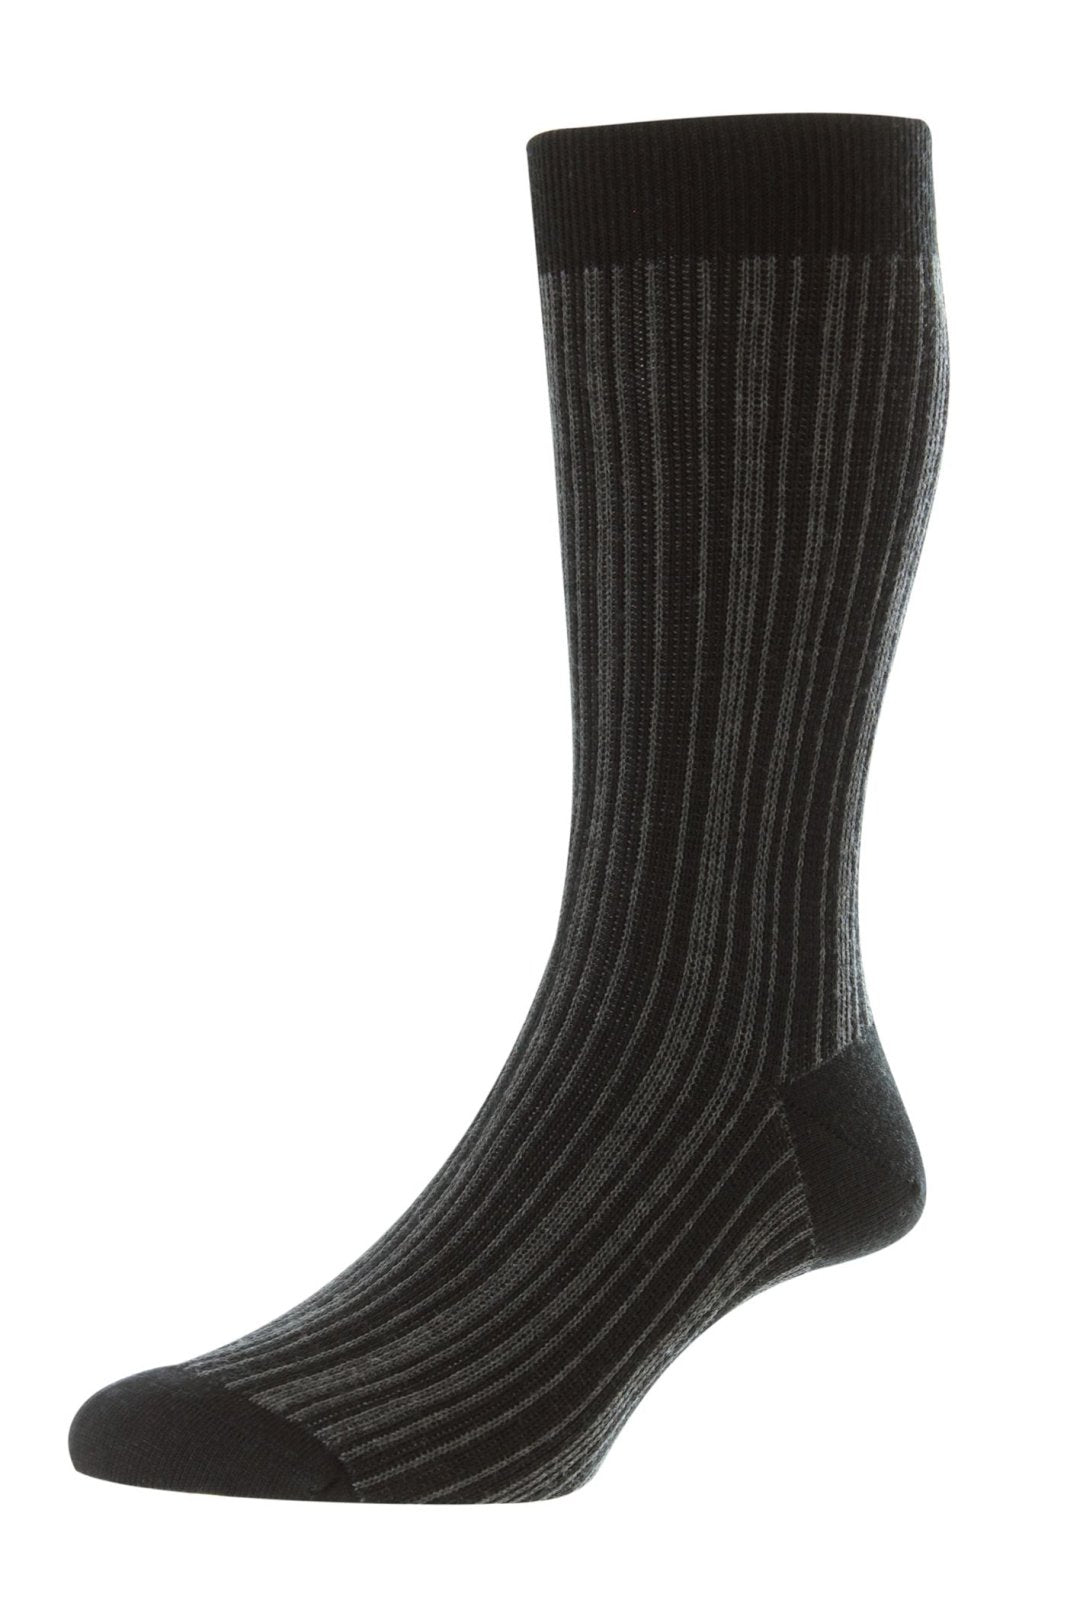 PANTHERELLA - MARSDEN | Vertical Stripe | Black/Charcoal - HANSEN Garments